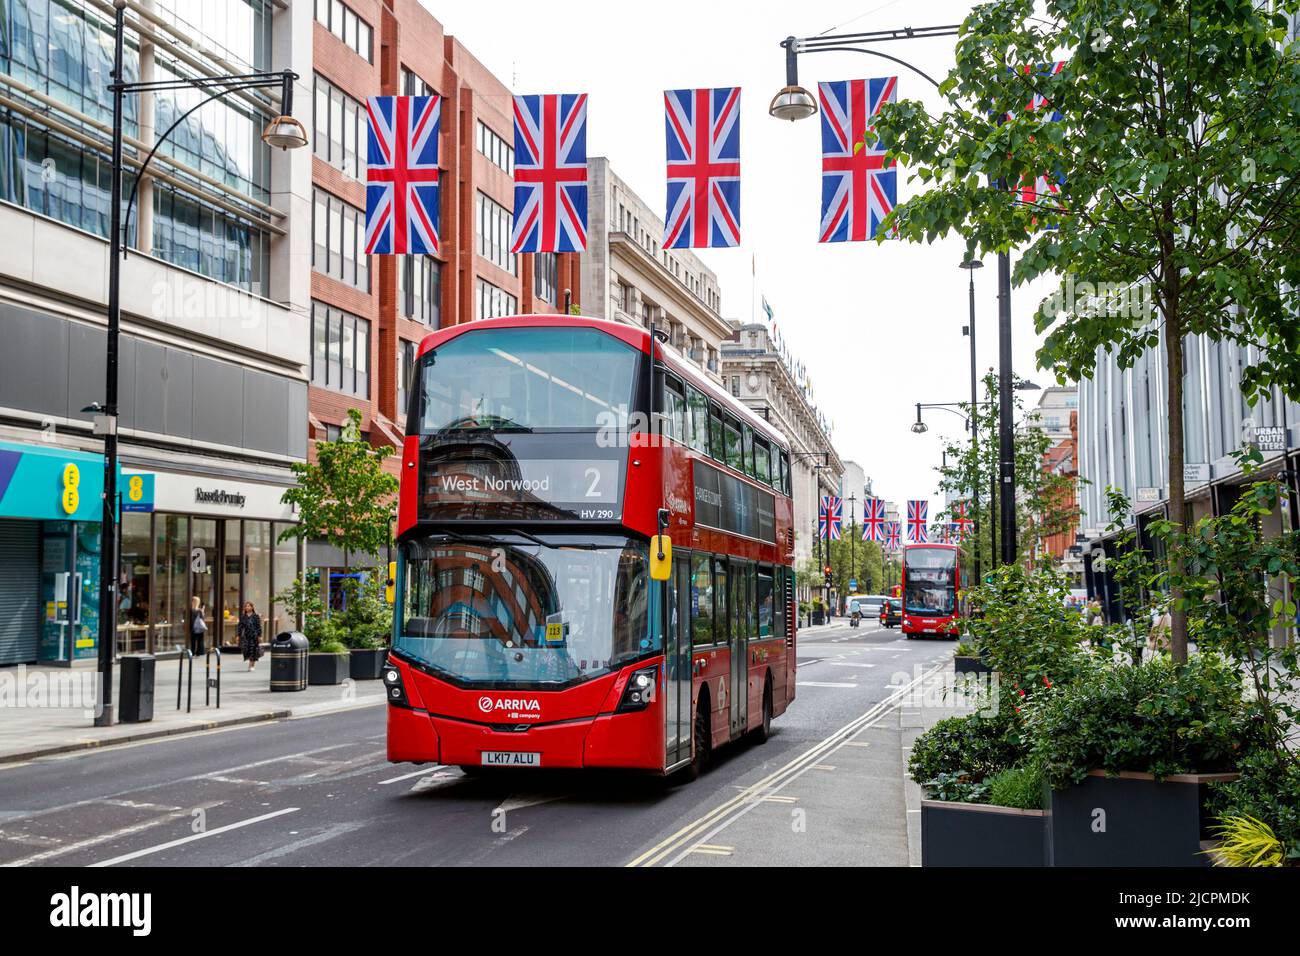 Red London Double Decker bus, route 2 vers West Norwood sur Oxford Street, Londres, Angleterre, Royaume-Uni, mercredi, 18 mai 2022. Banque D'Images